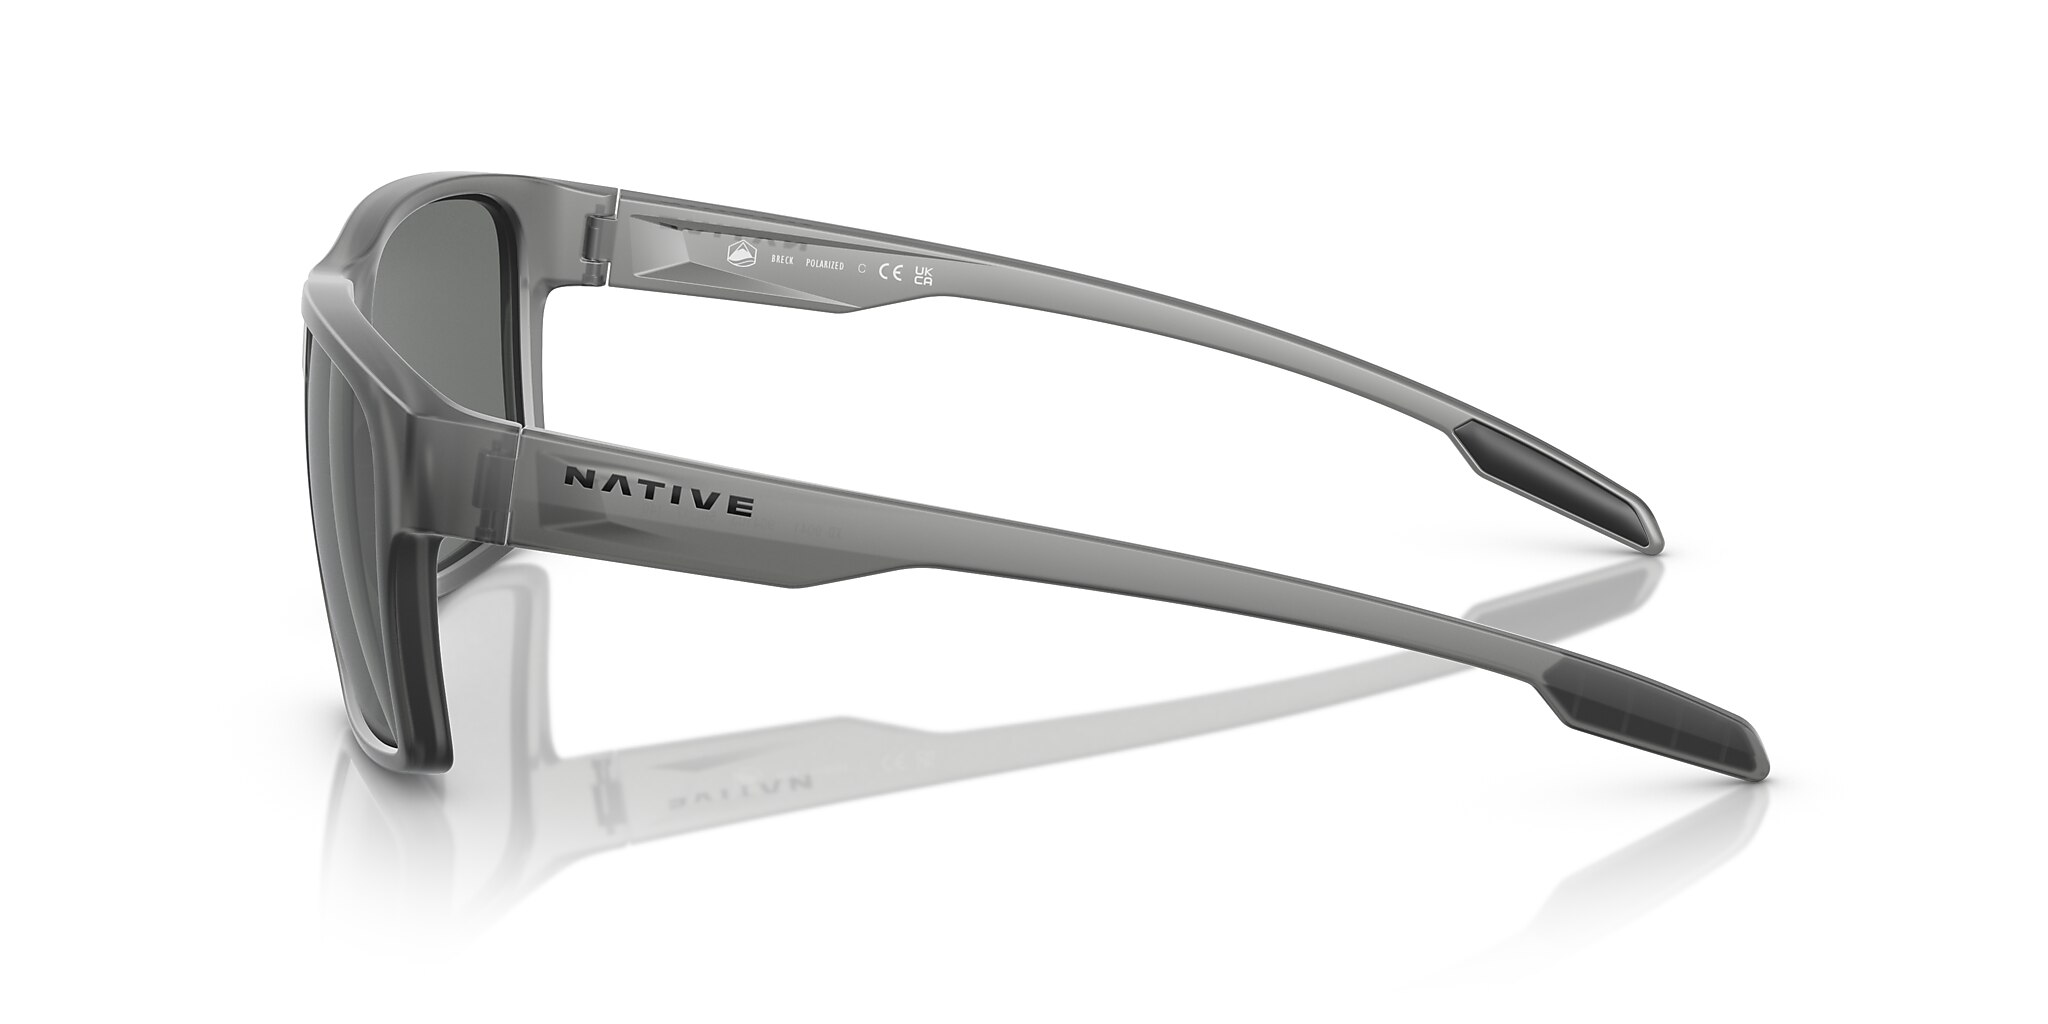 Breck Sunglasses in Grey Polarized | Native Eyewear®